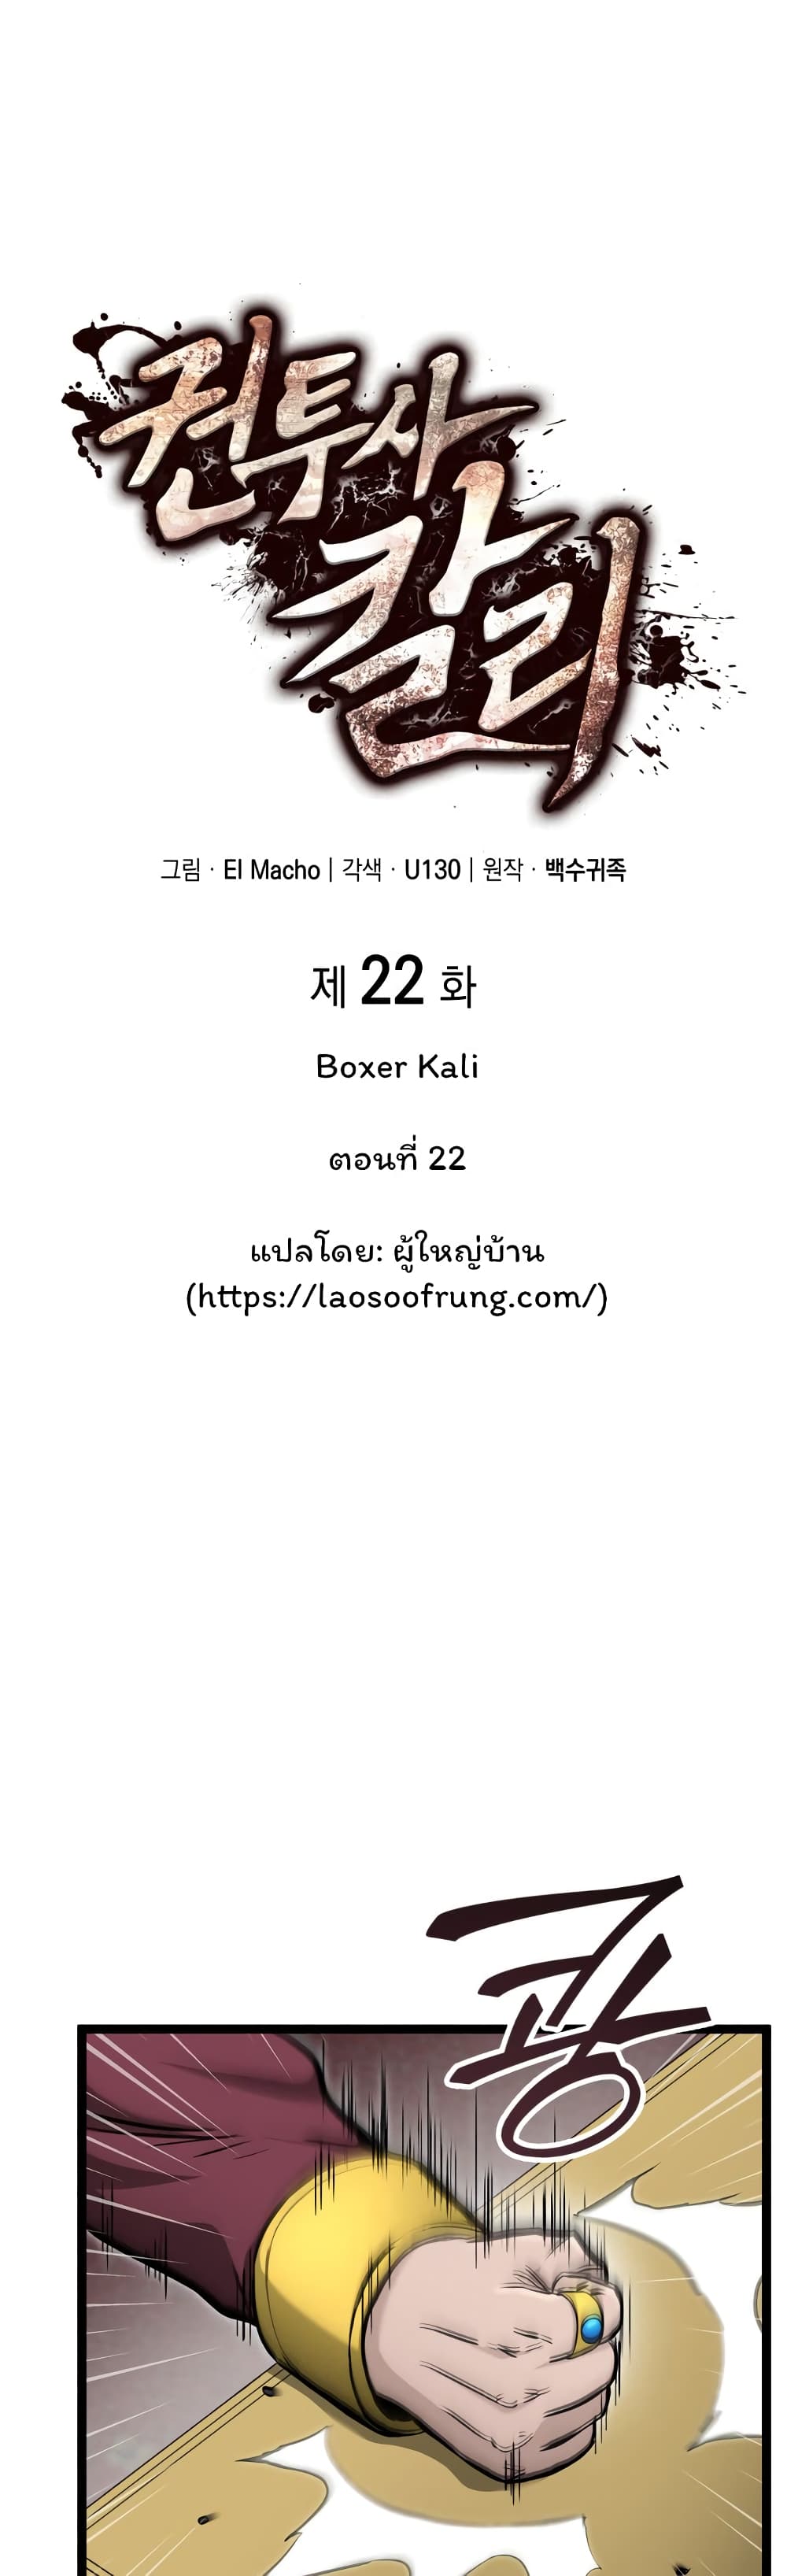 Boxer Kali ตอนที่ 22 (5)